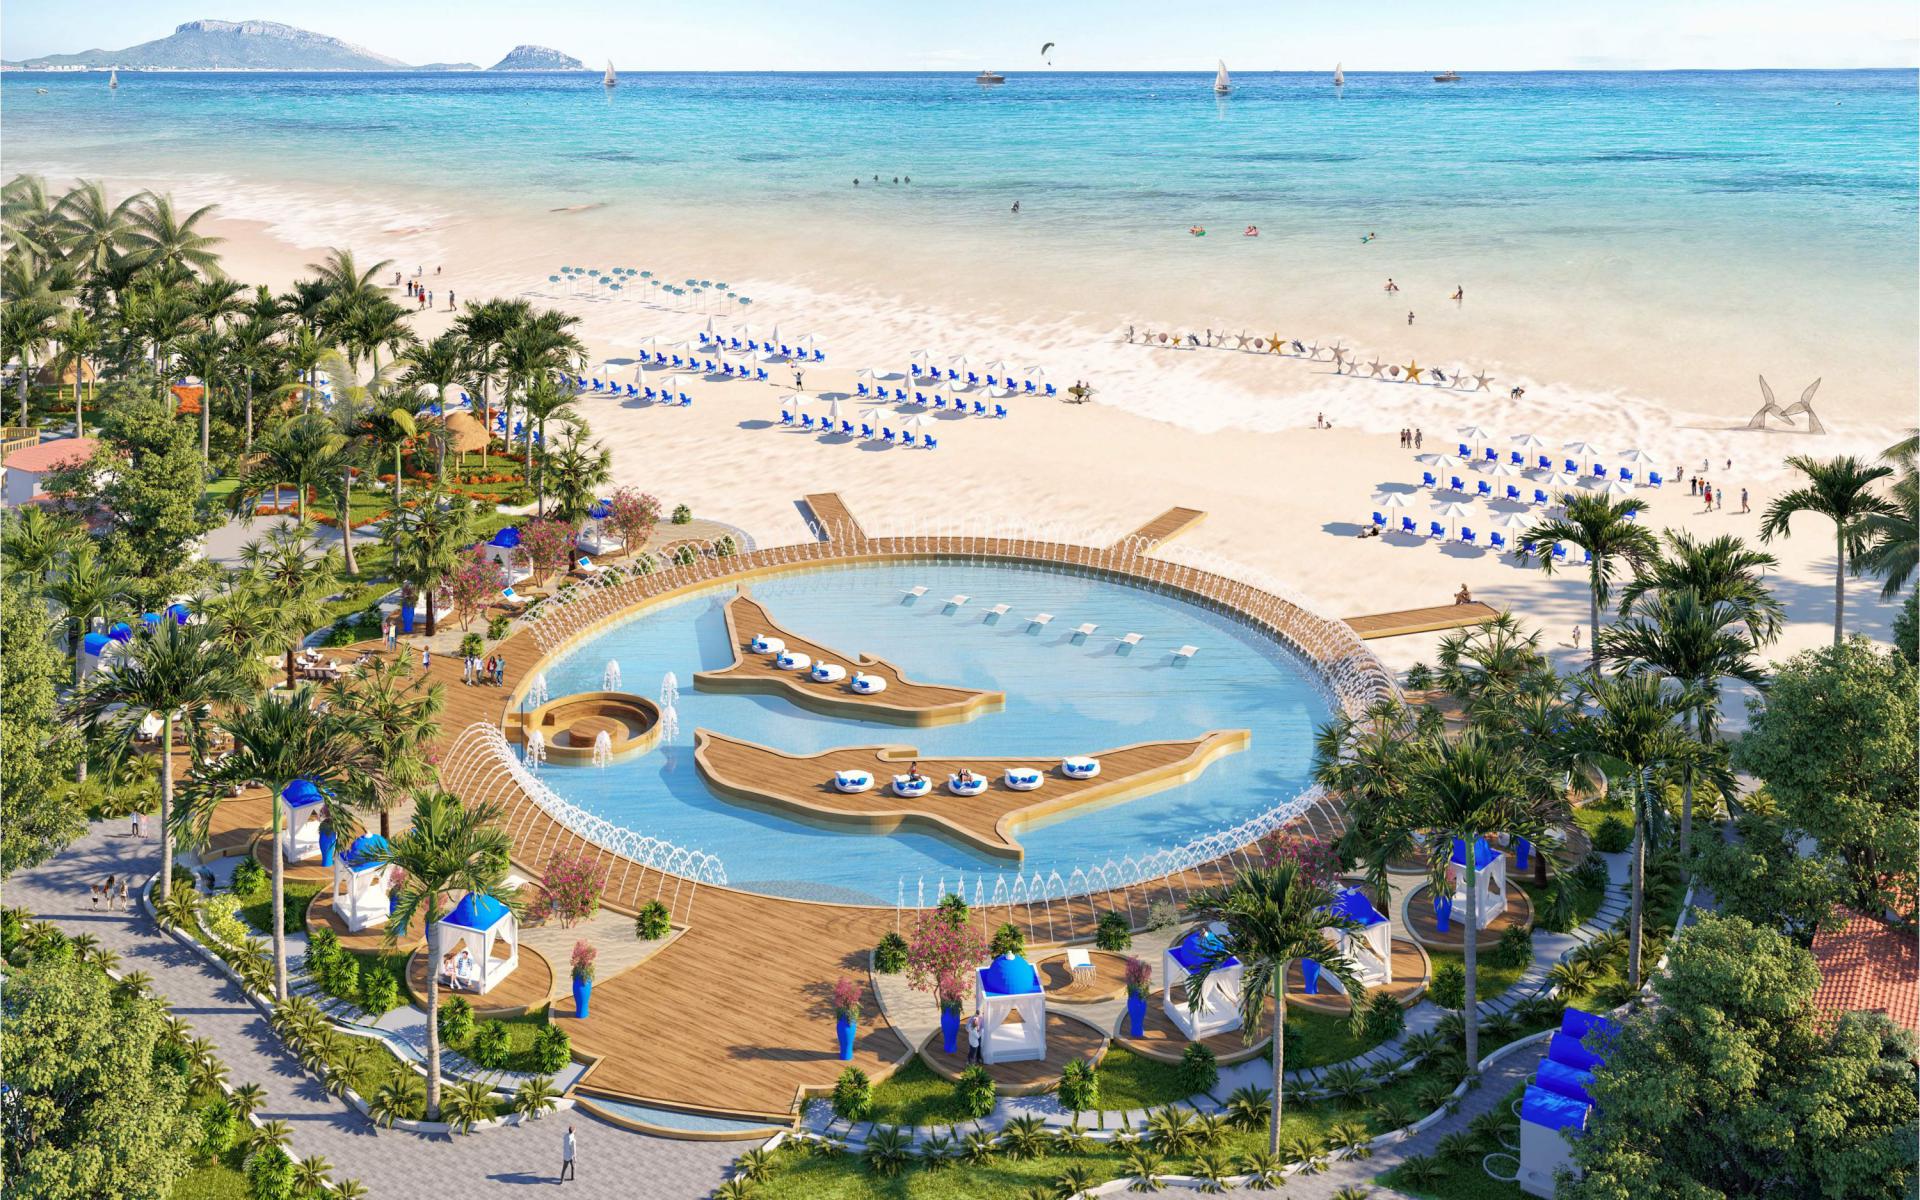 Cam Ranh Bay Hotels & Resorts